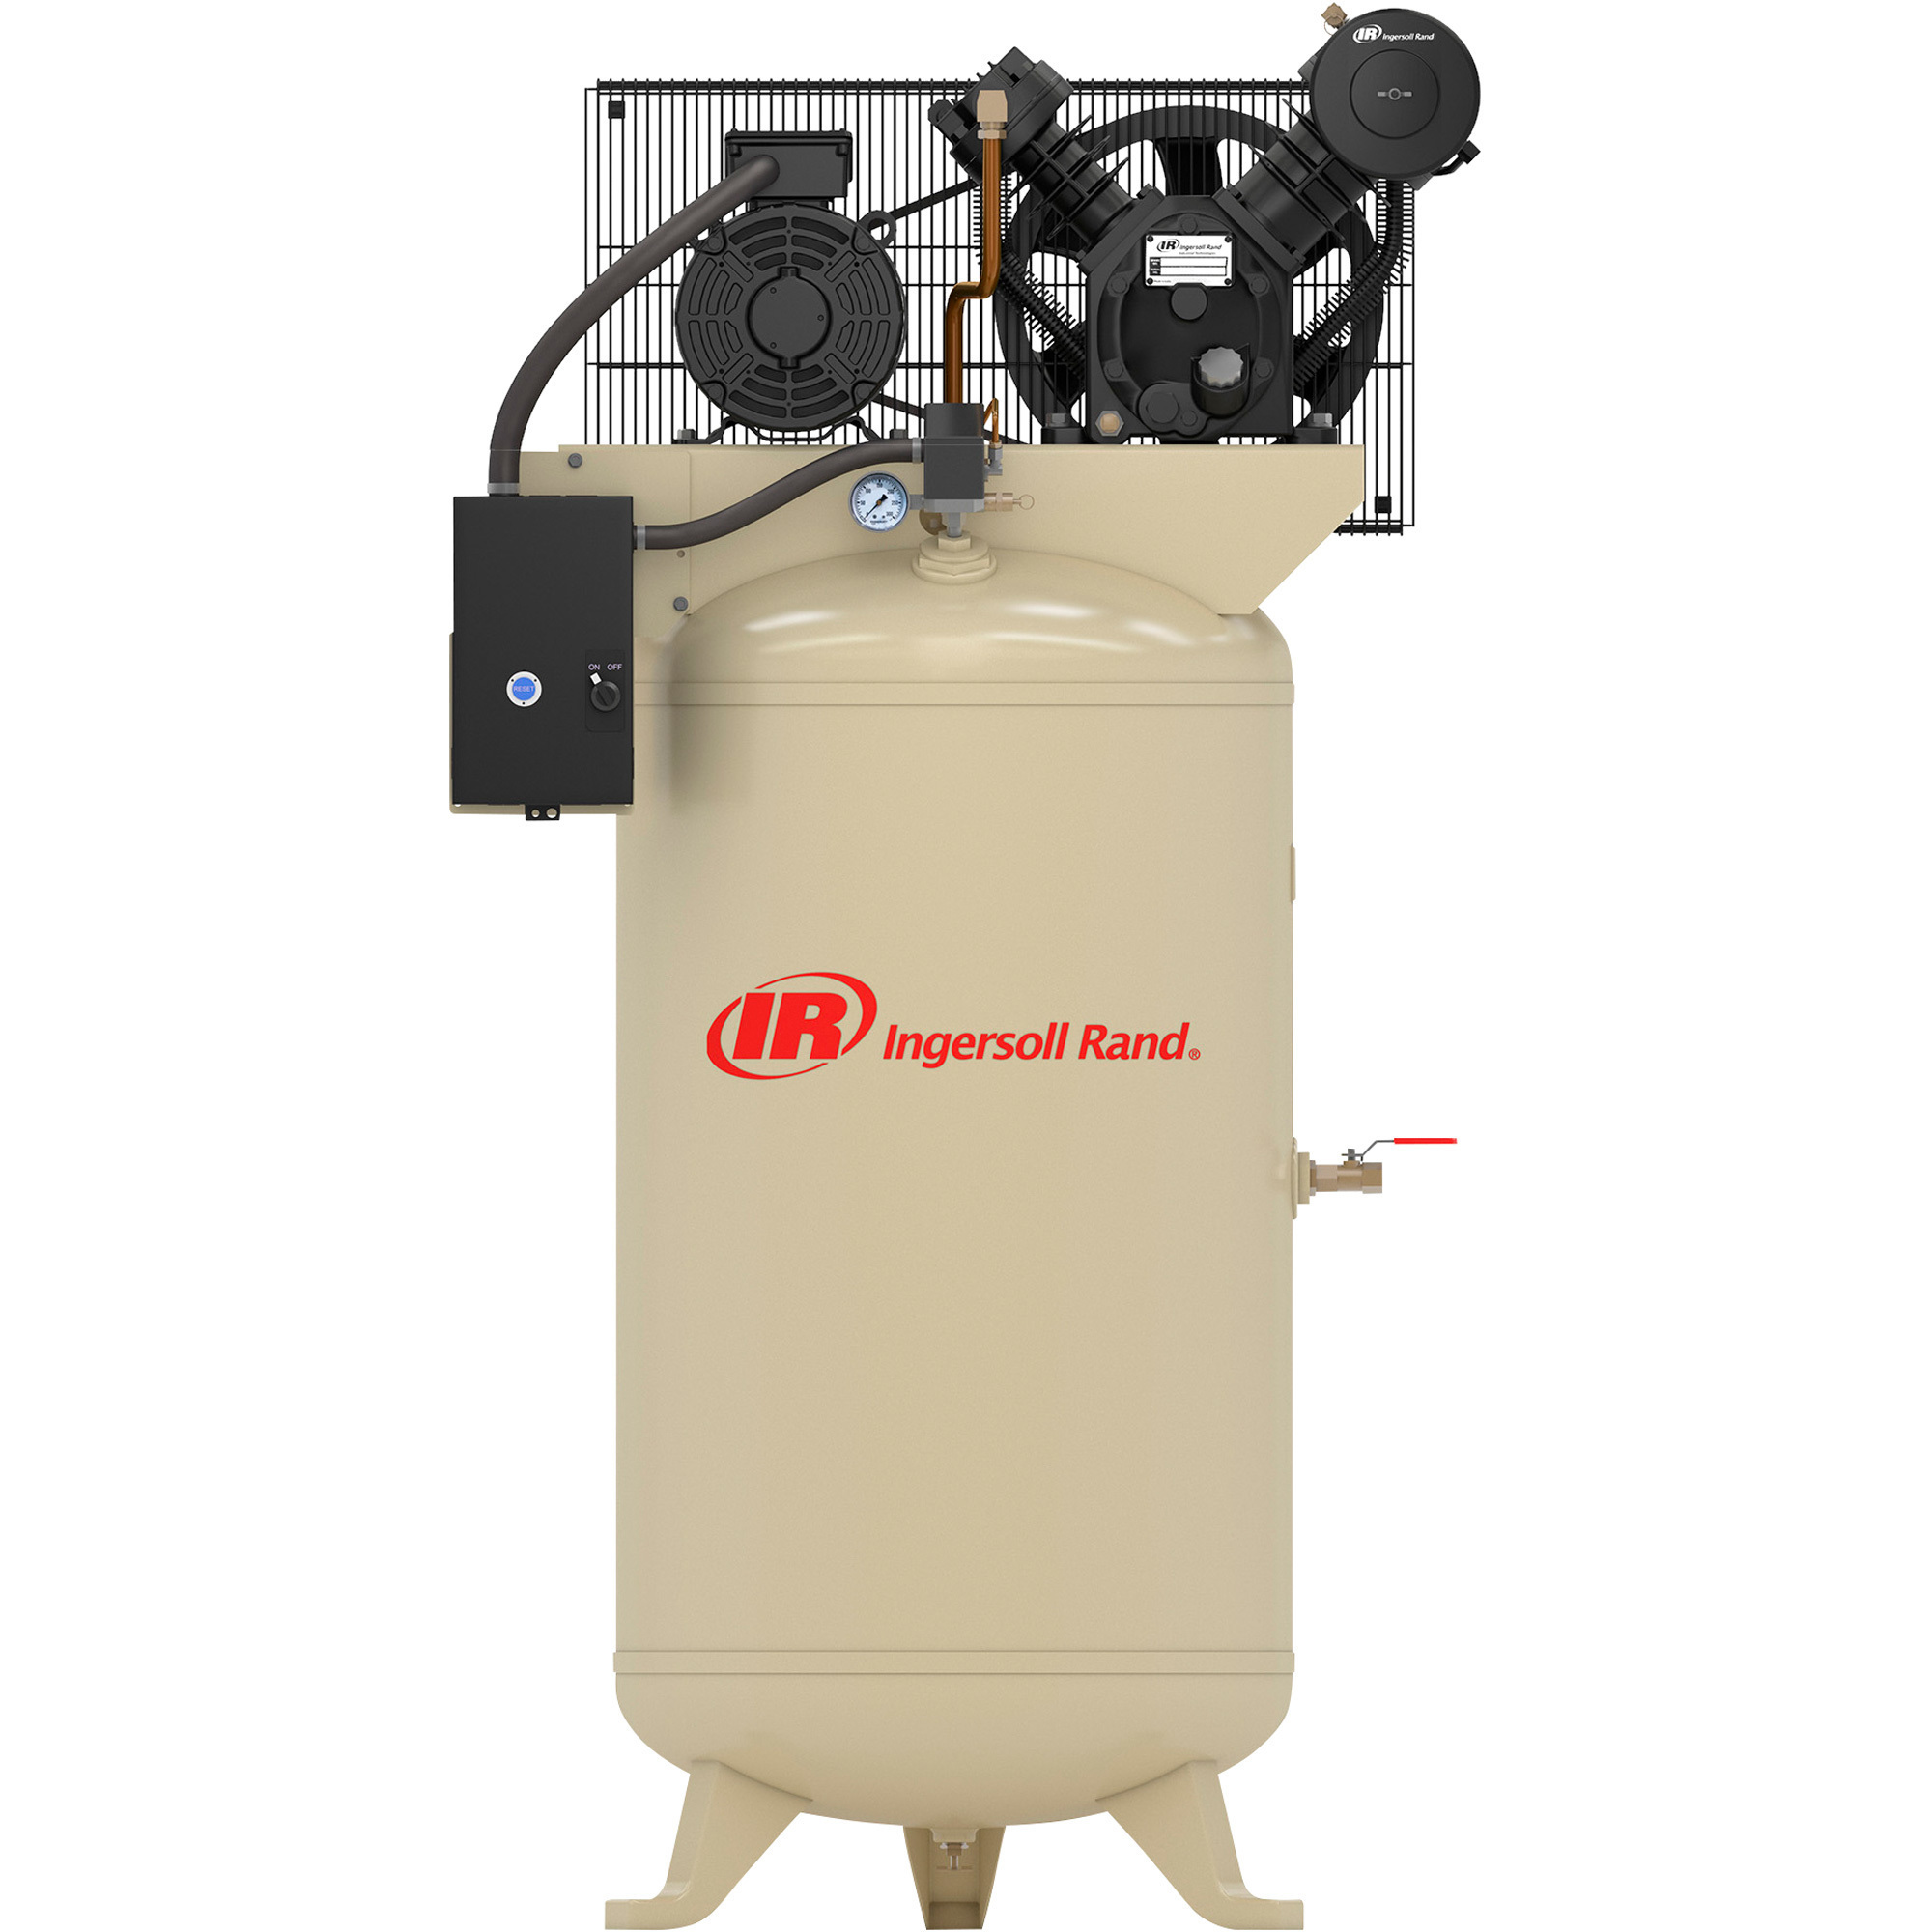 Ingersoll Rand Type-30 Reciprocating Air Compressor, 5 HP, 460 Volt, 3 Phase, 80 Gallon, Model 2340N5-V